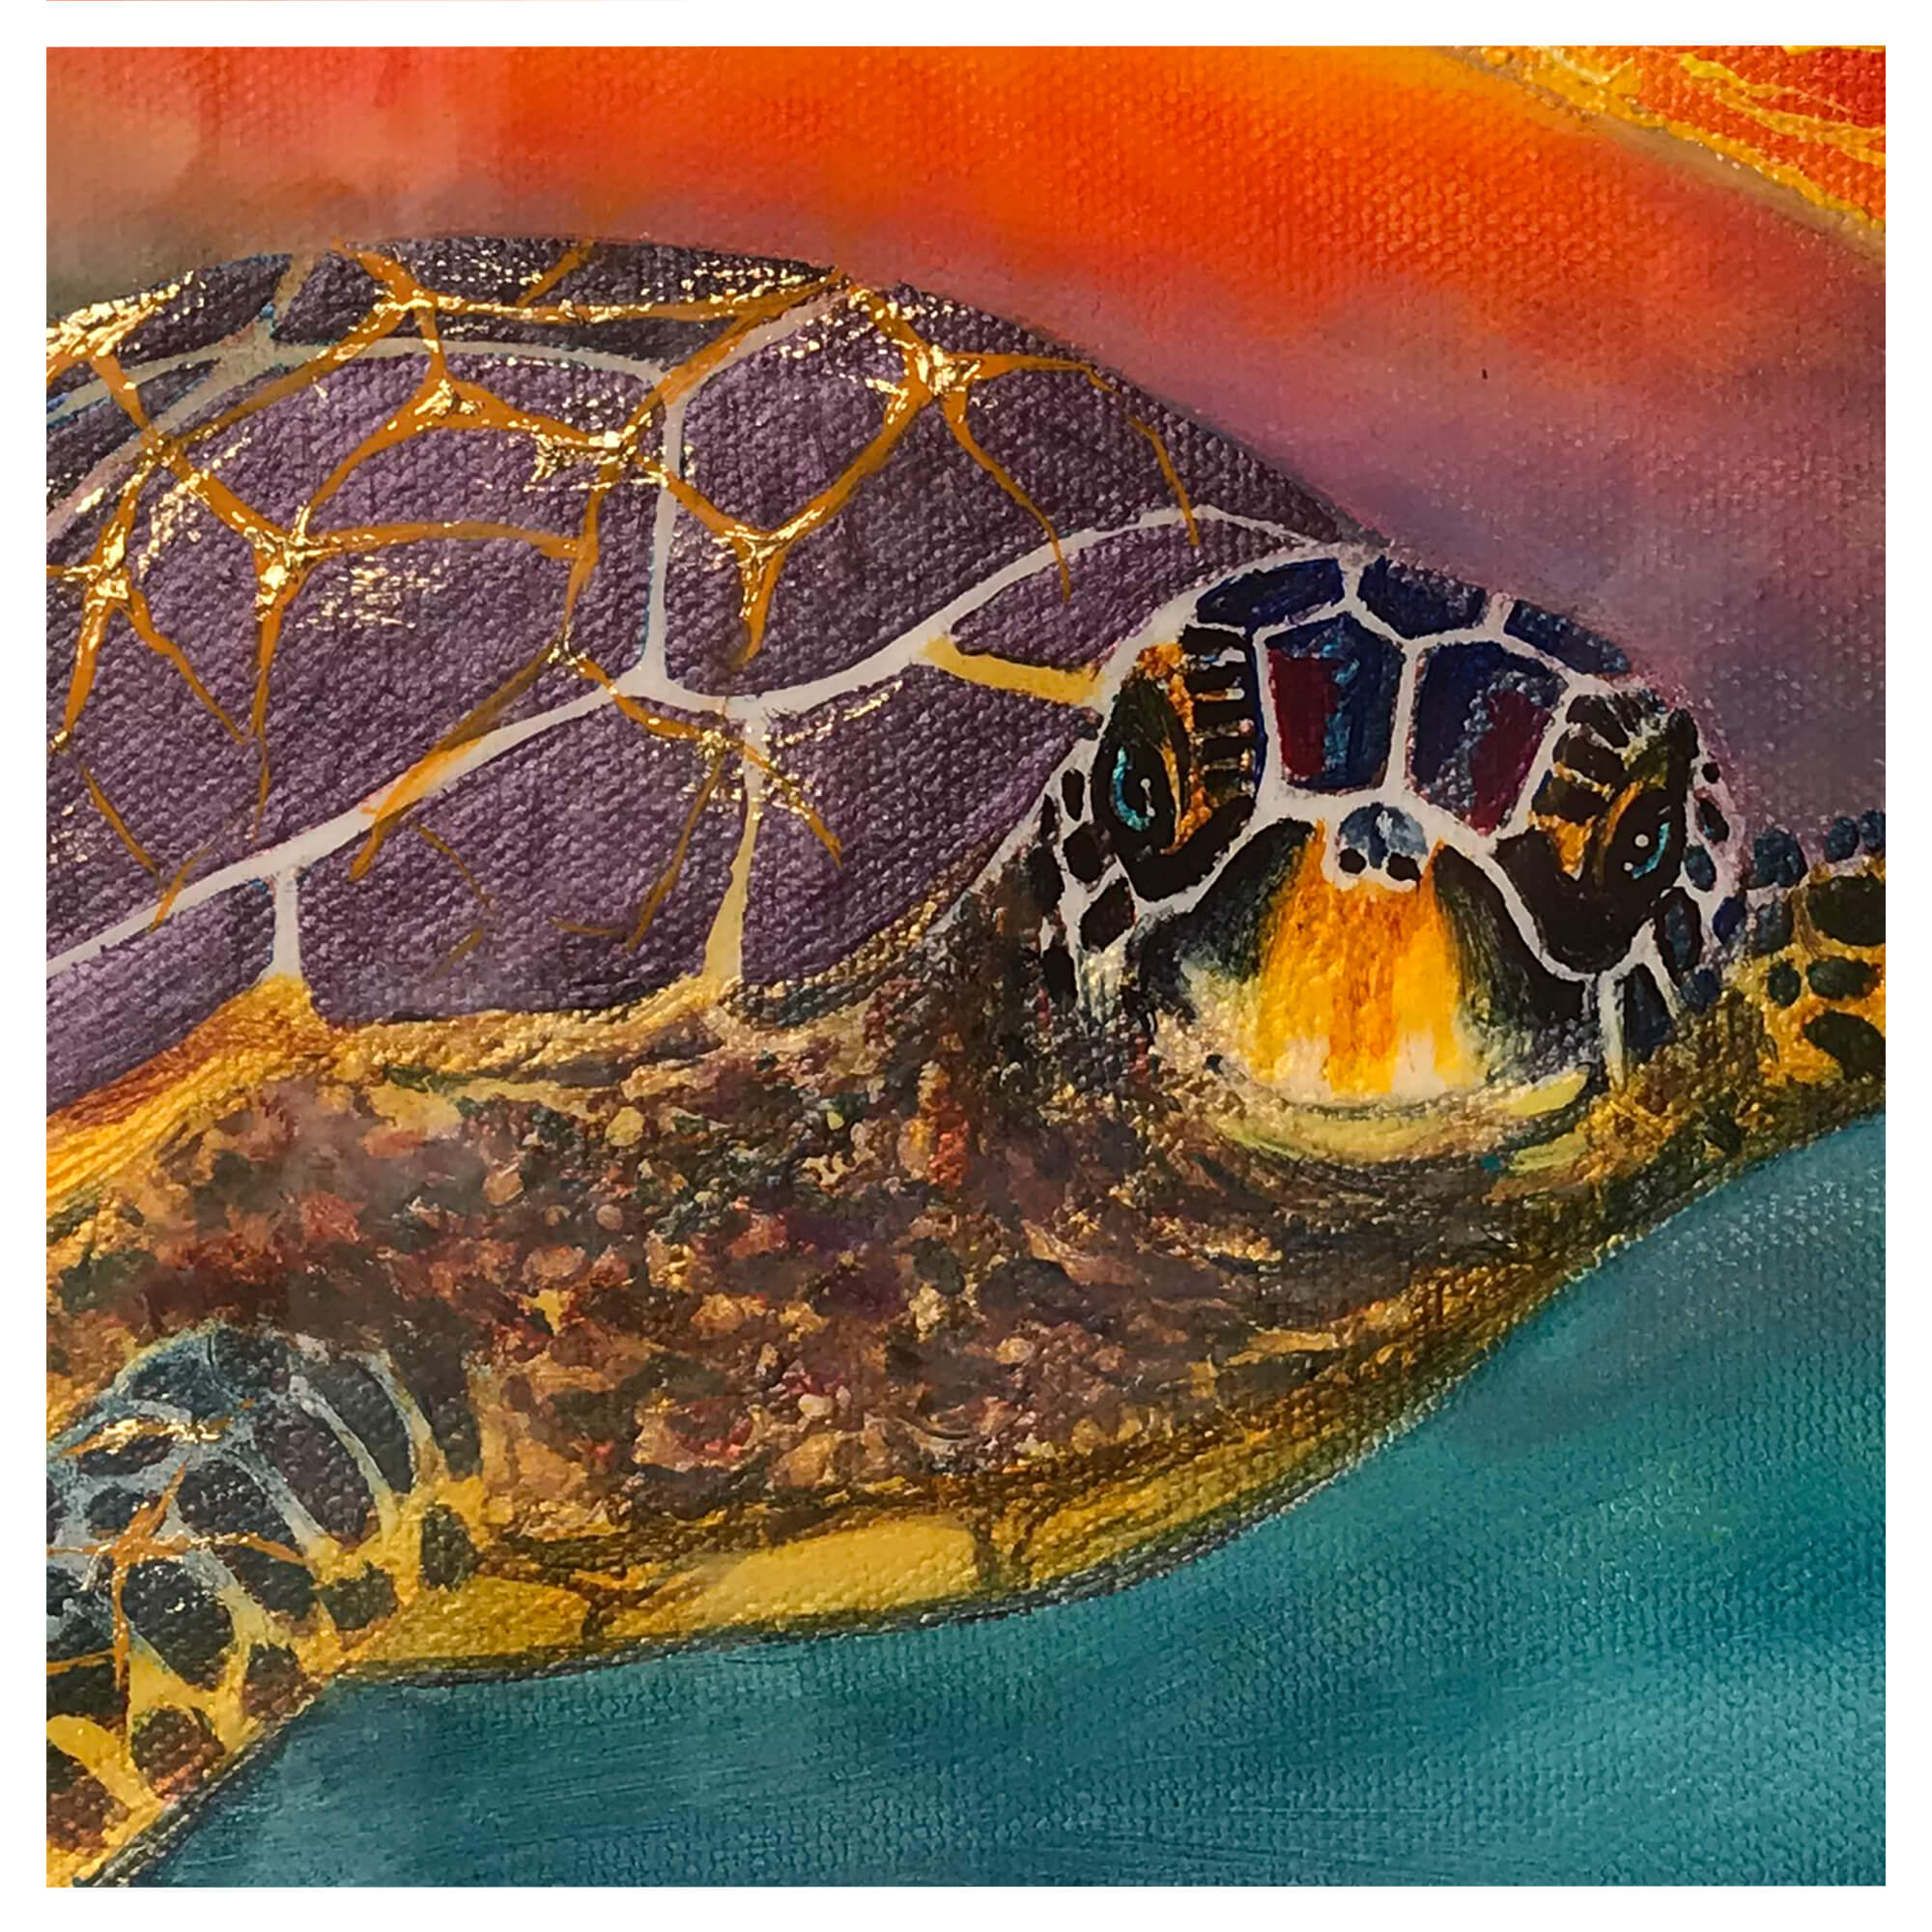 An illustration of a turtle by hawaii artist Galina Lintz